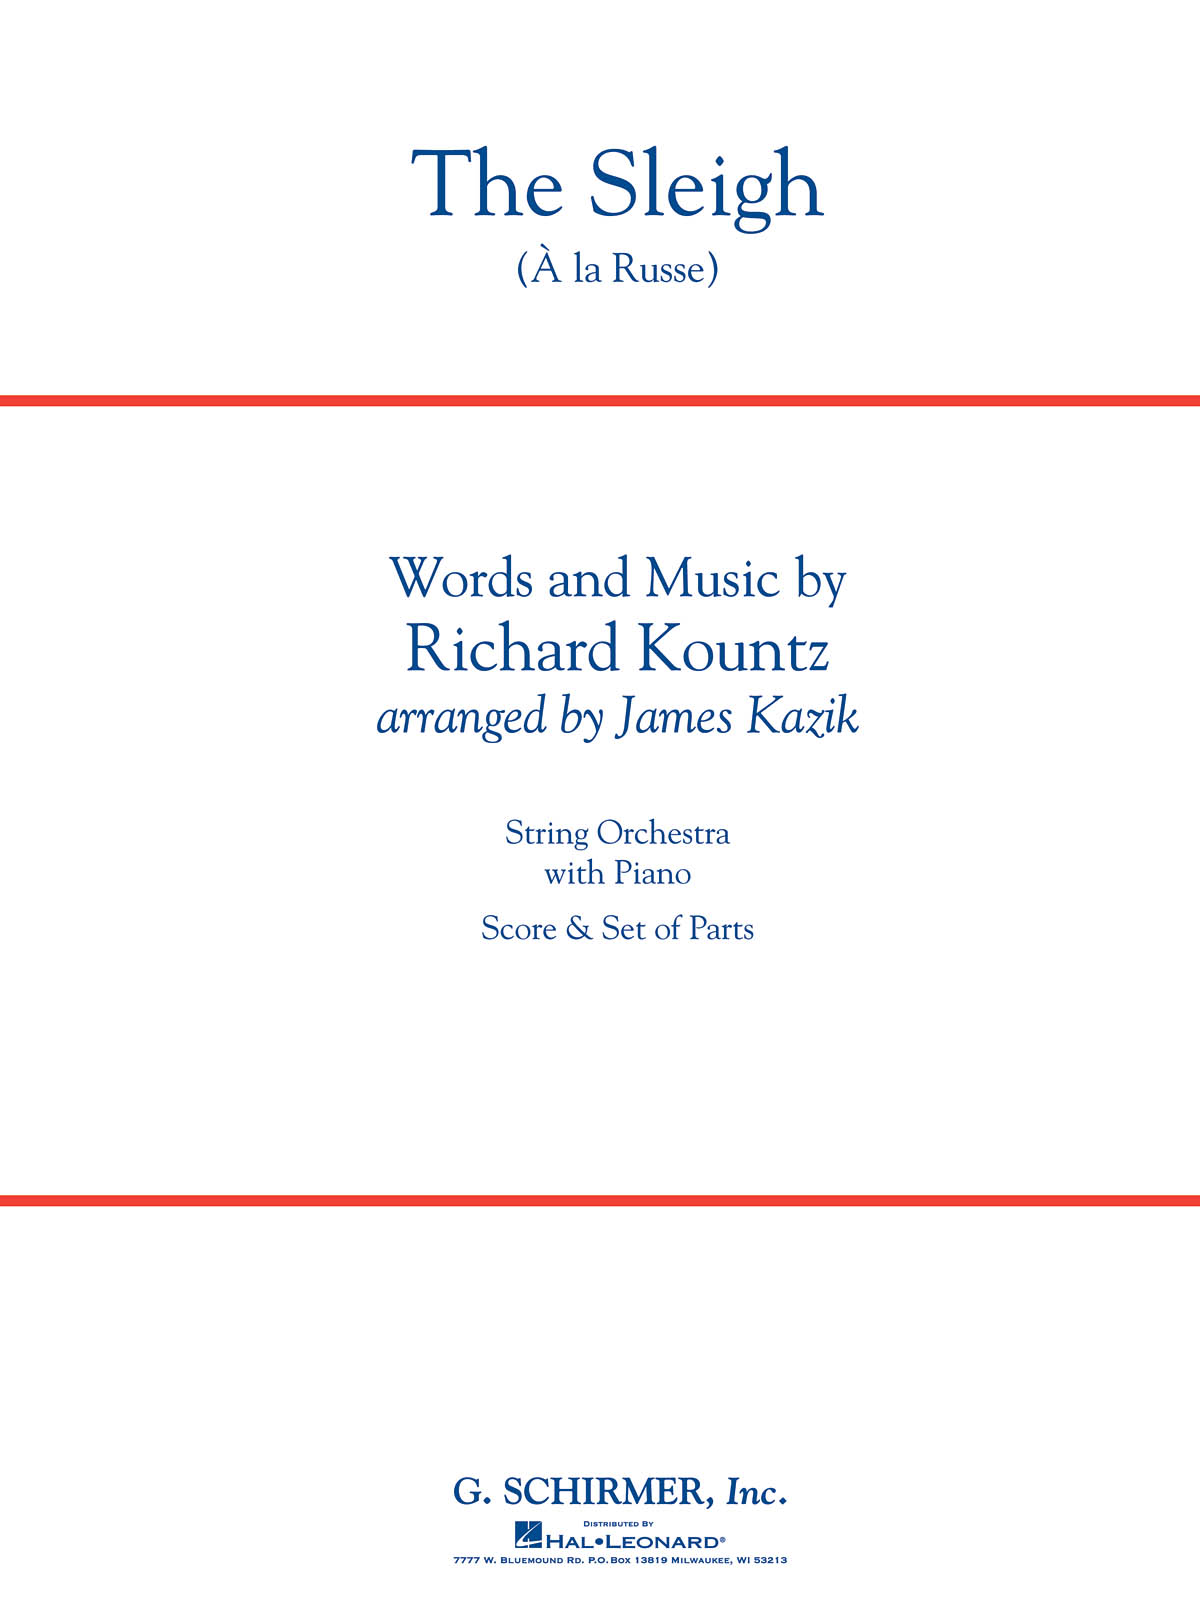 Richard Kountz: The Sleigh (£ La Russe): String Orchestra: Score & Parts